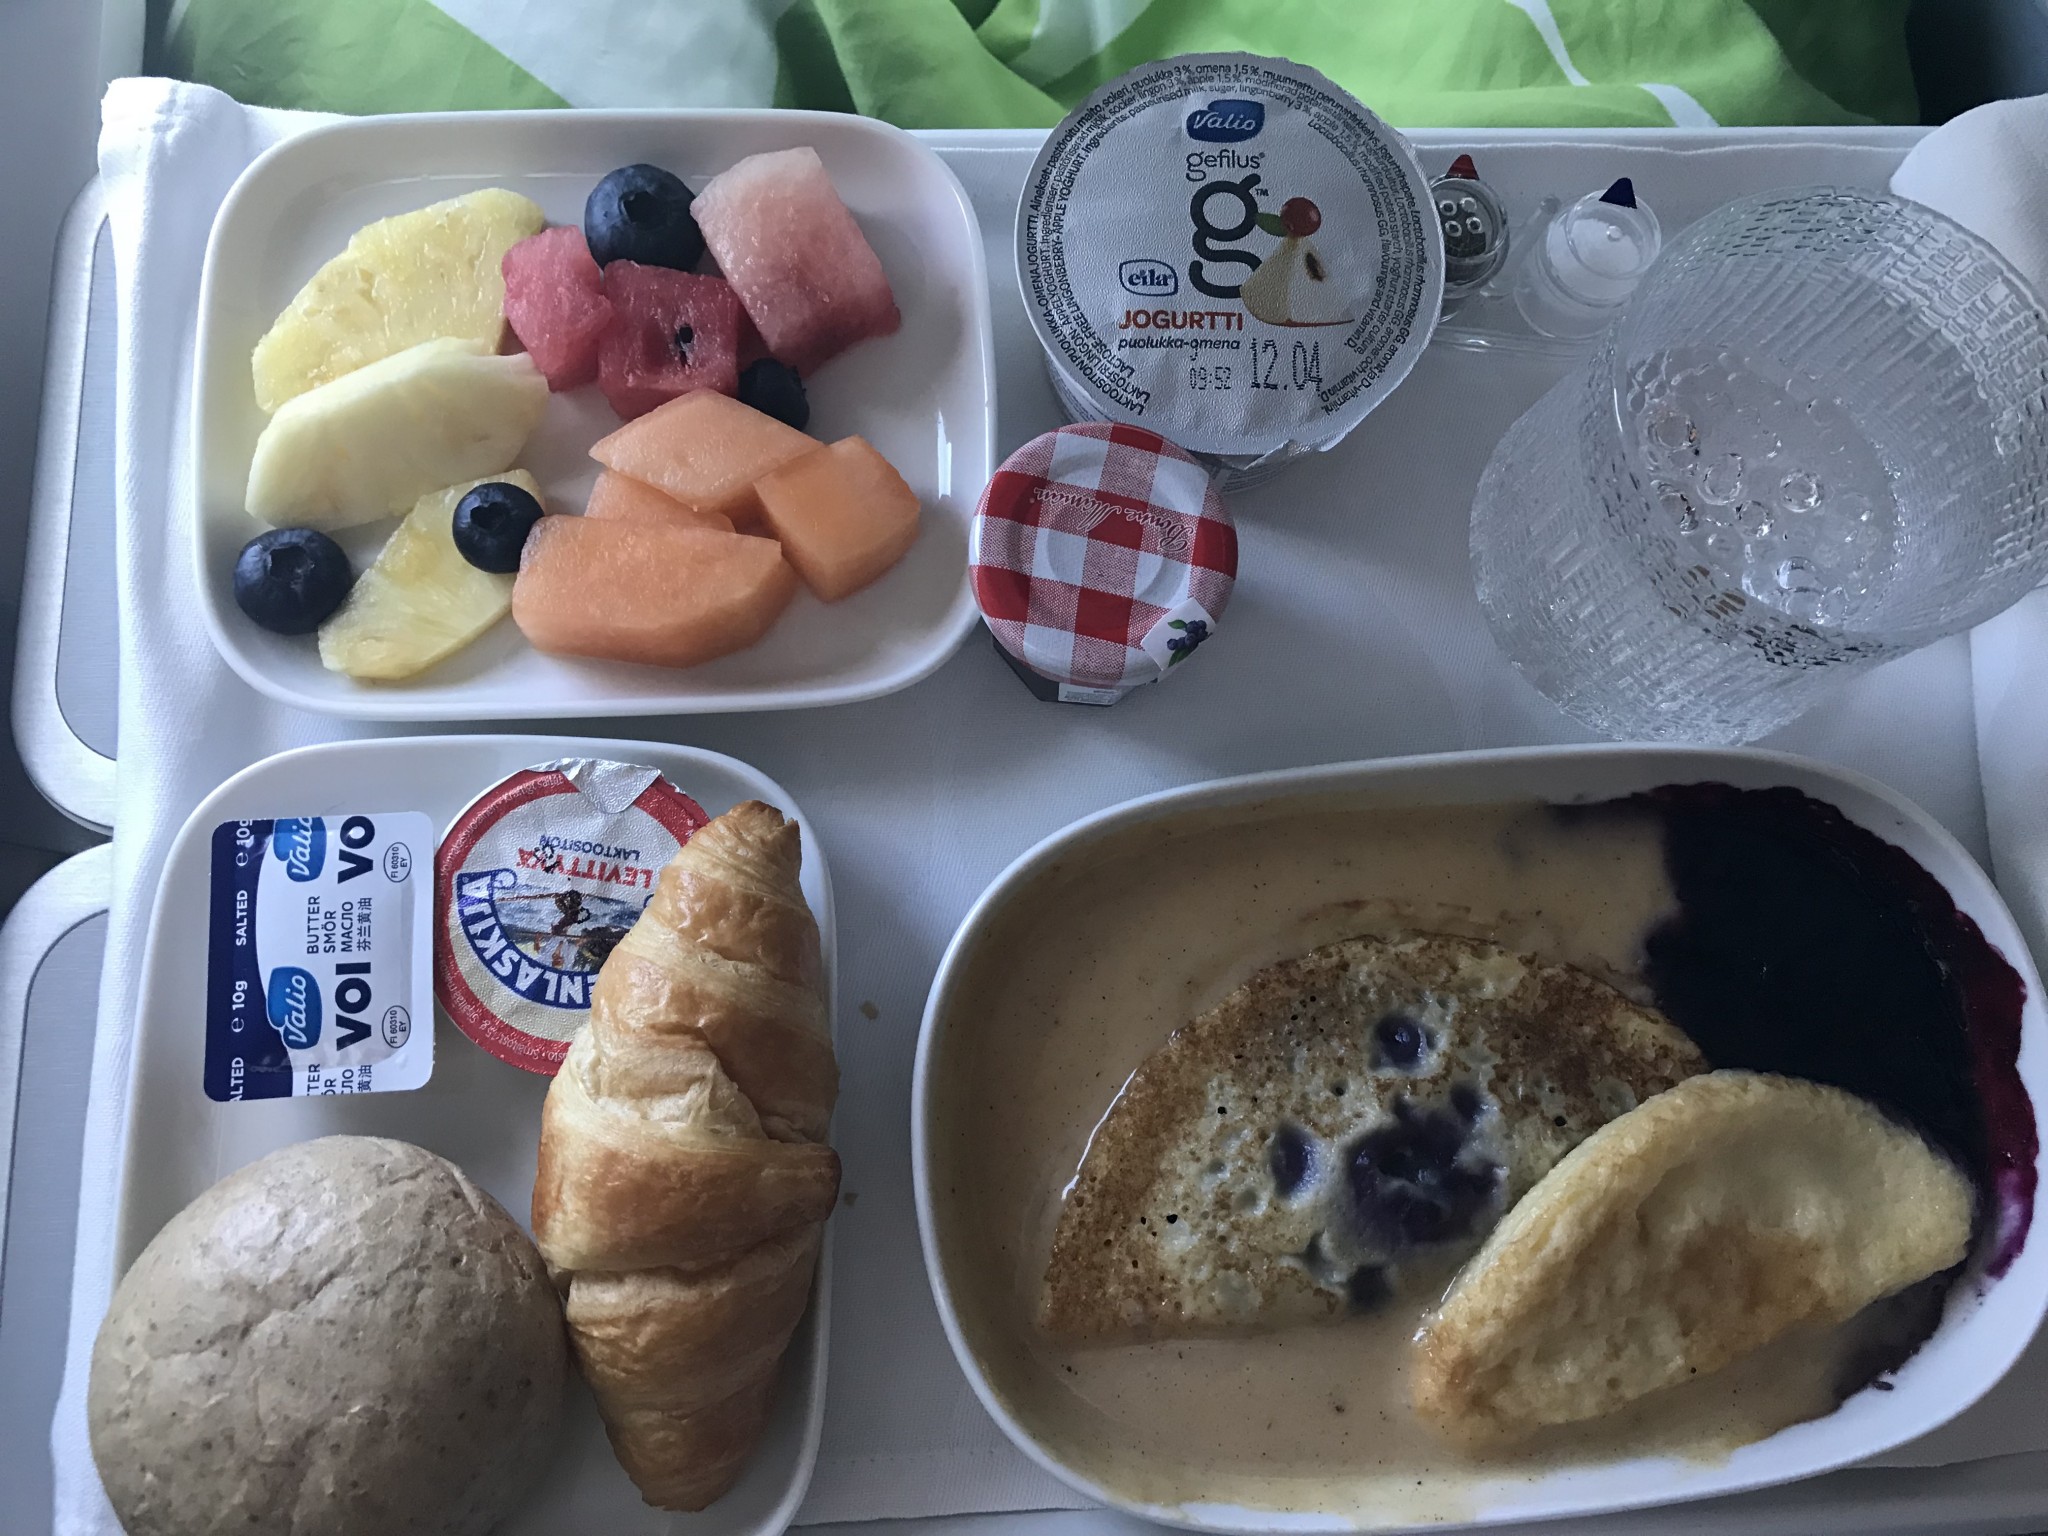 Breakfast on Finnaire business class flight AY 131